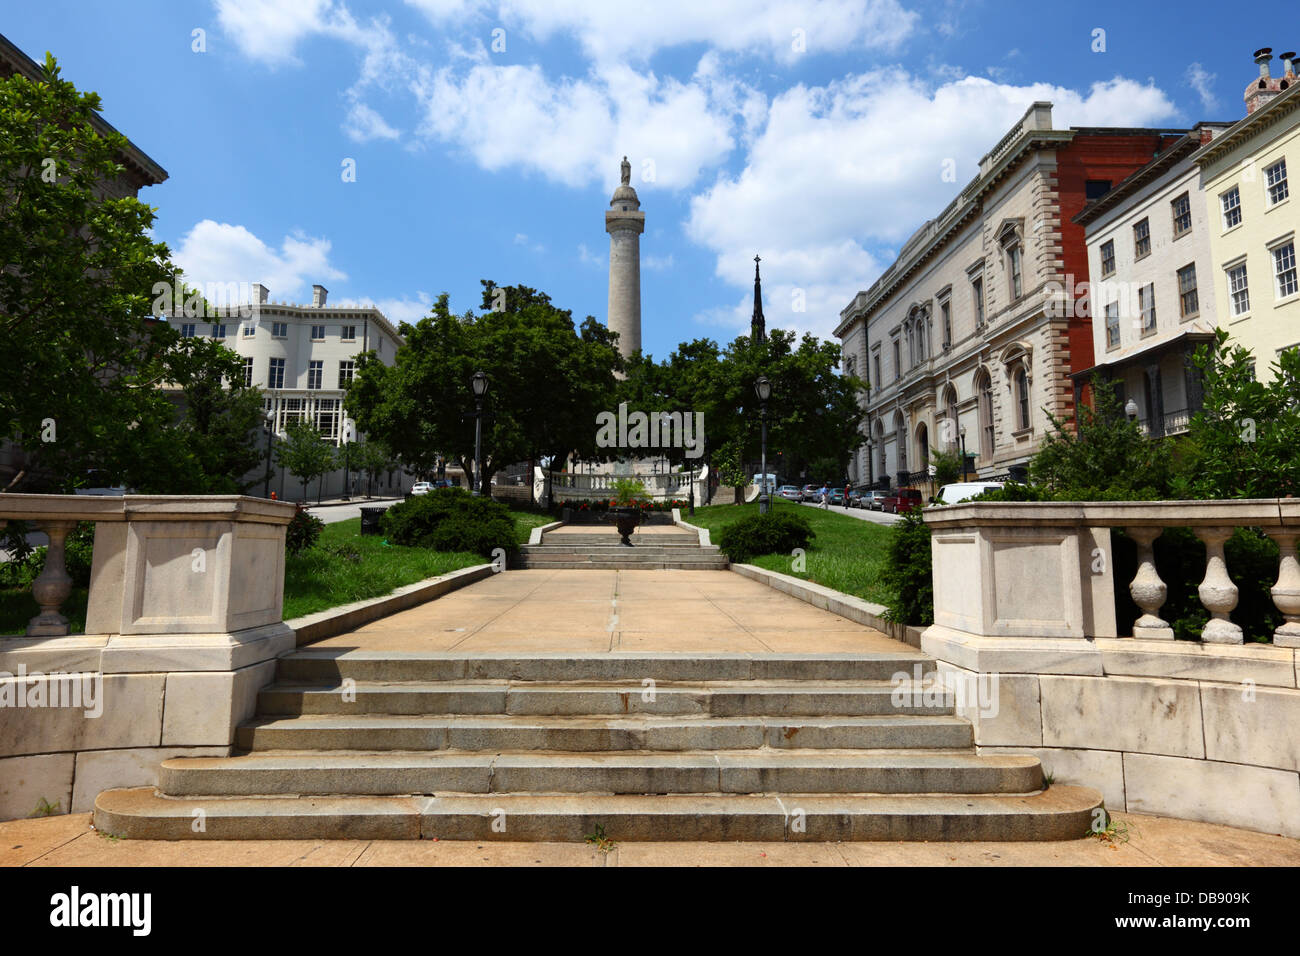 Peabody Institute building and George Washington monument, Washington Place, Mount Vernon, Baltimore, Maryland, USA Stock Photo